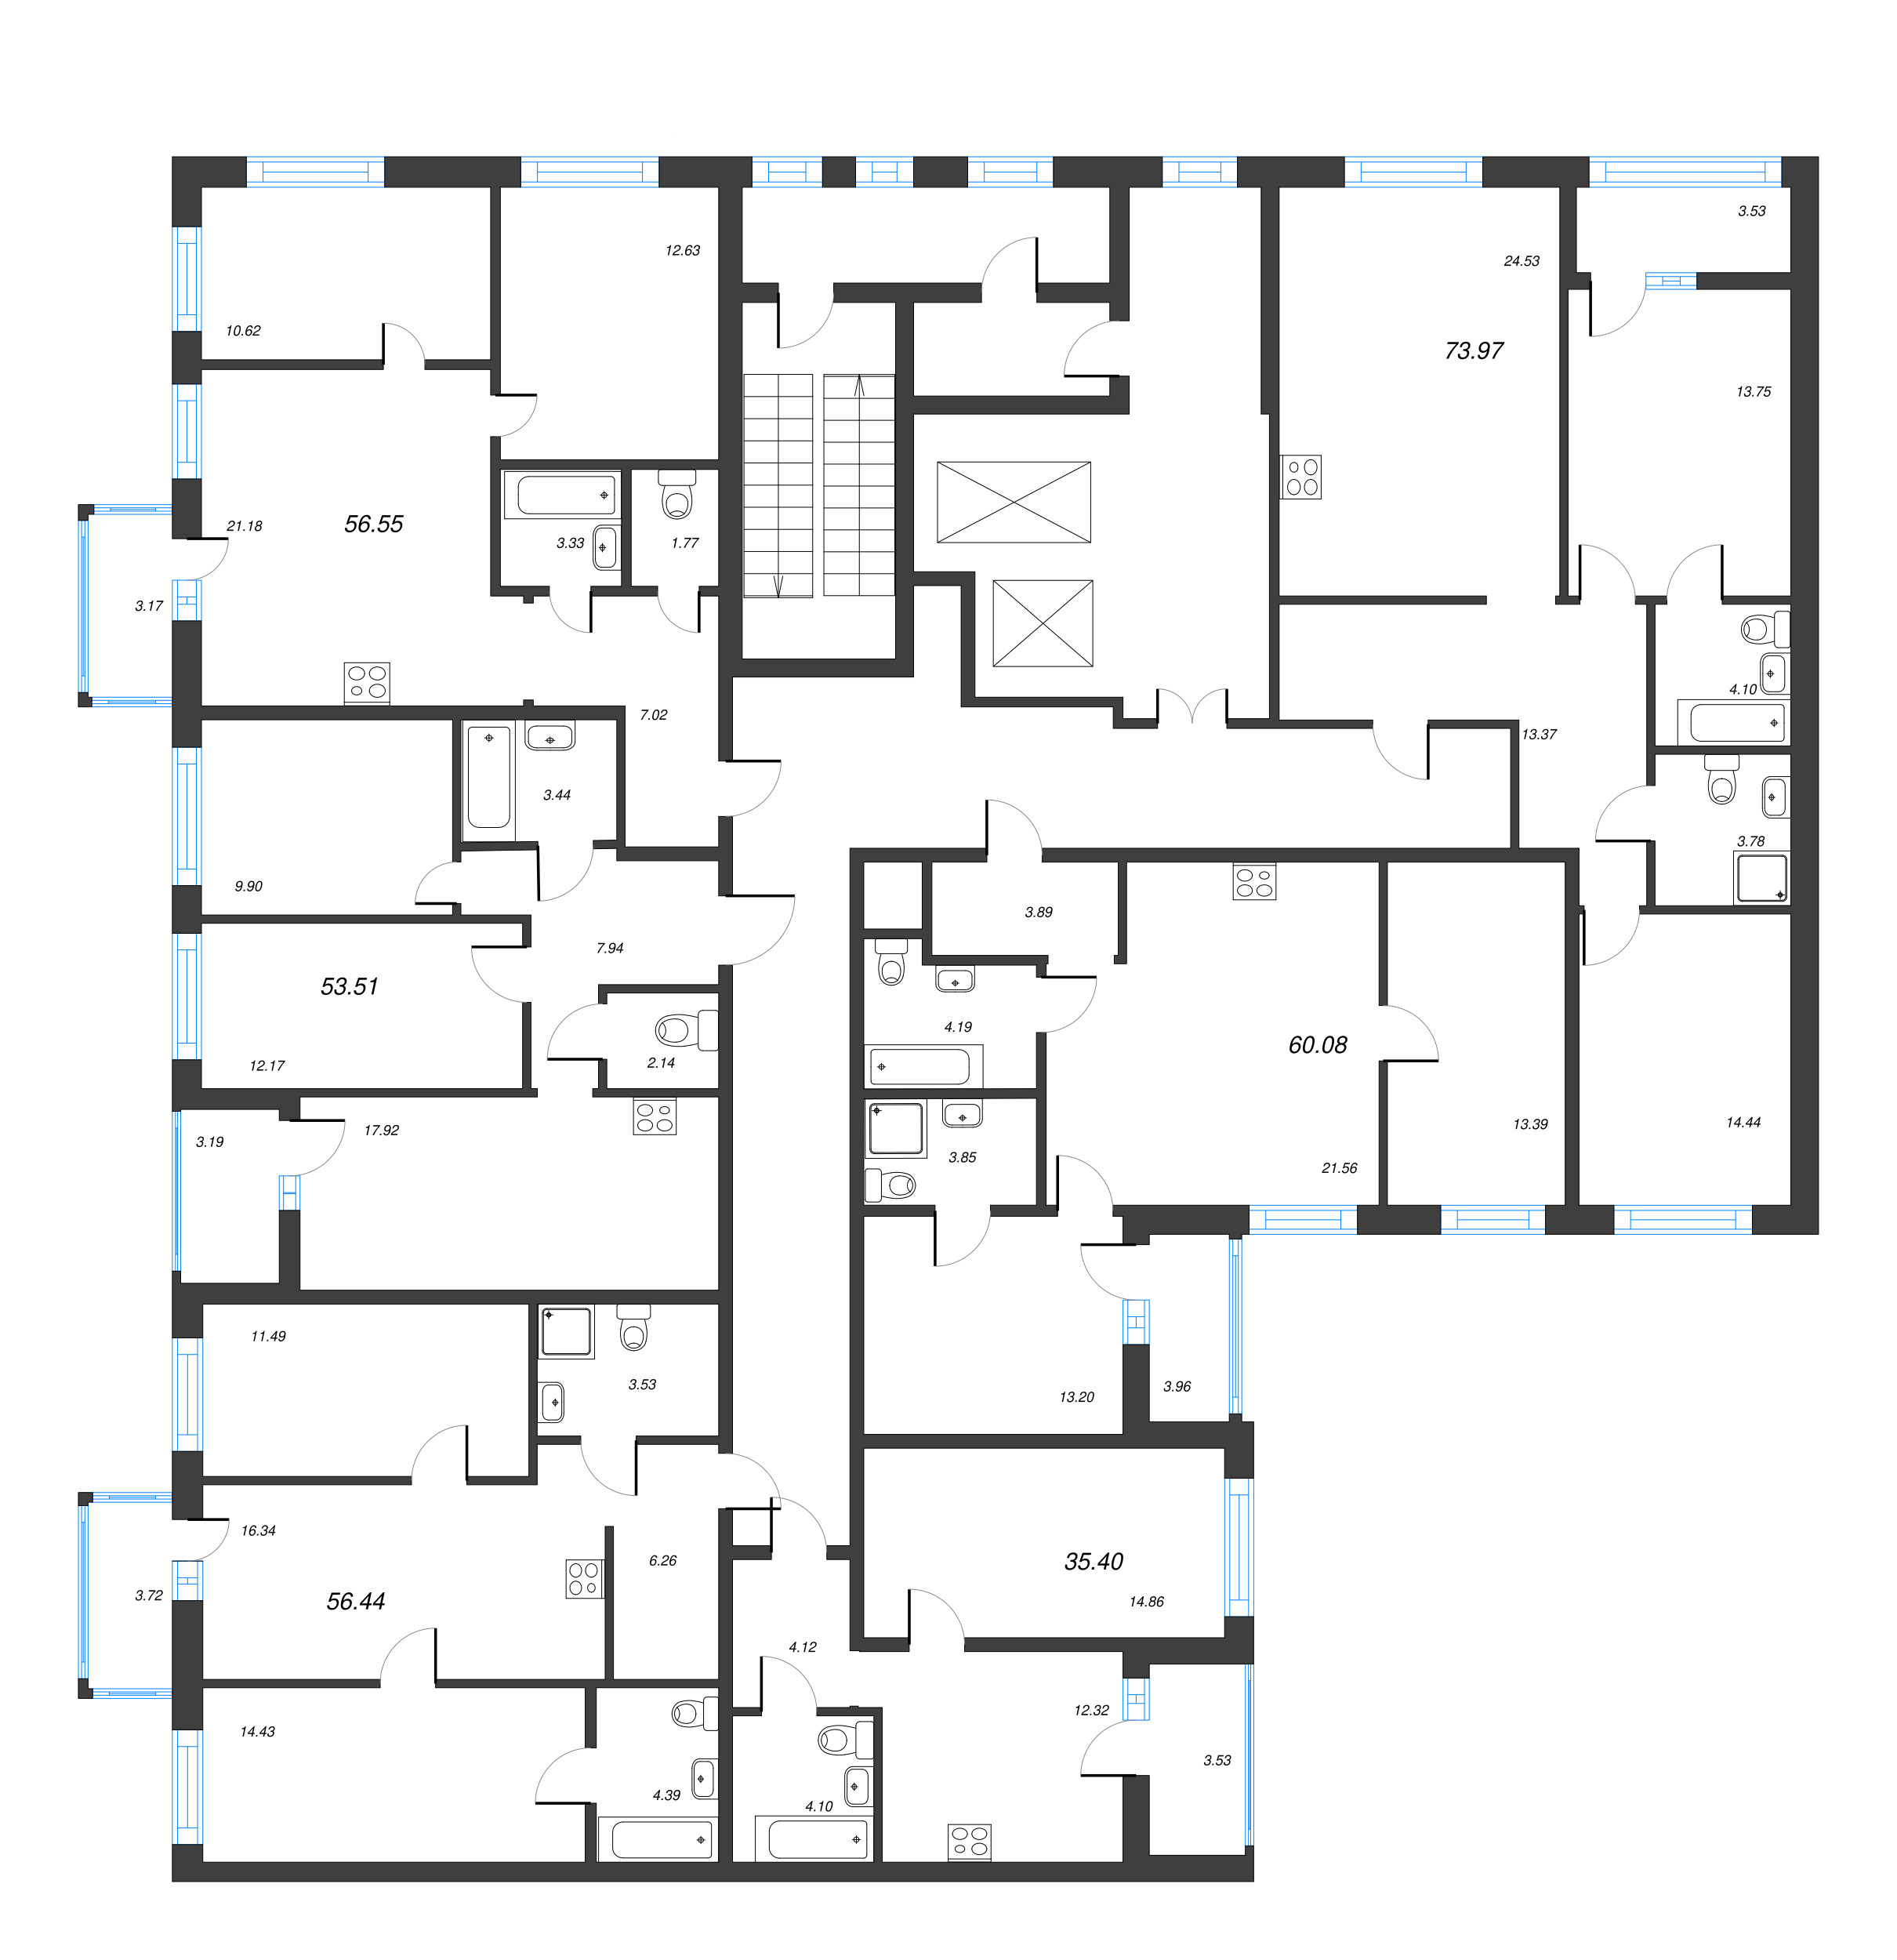 3-комнатная (Евро) квартира, 60.08 м² - планировка этажа